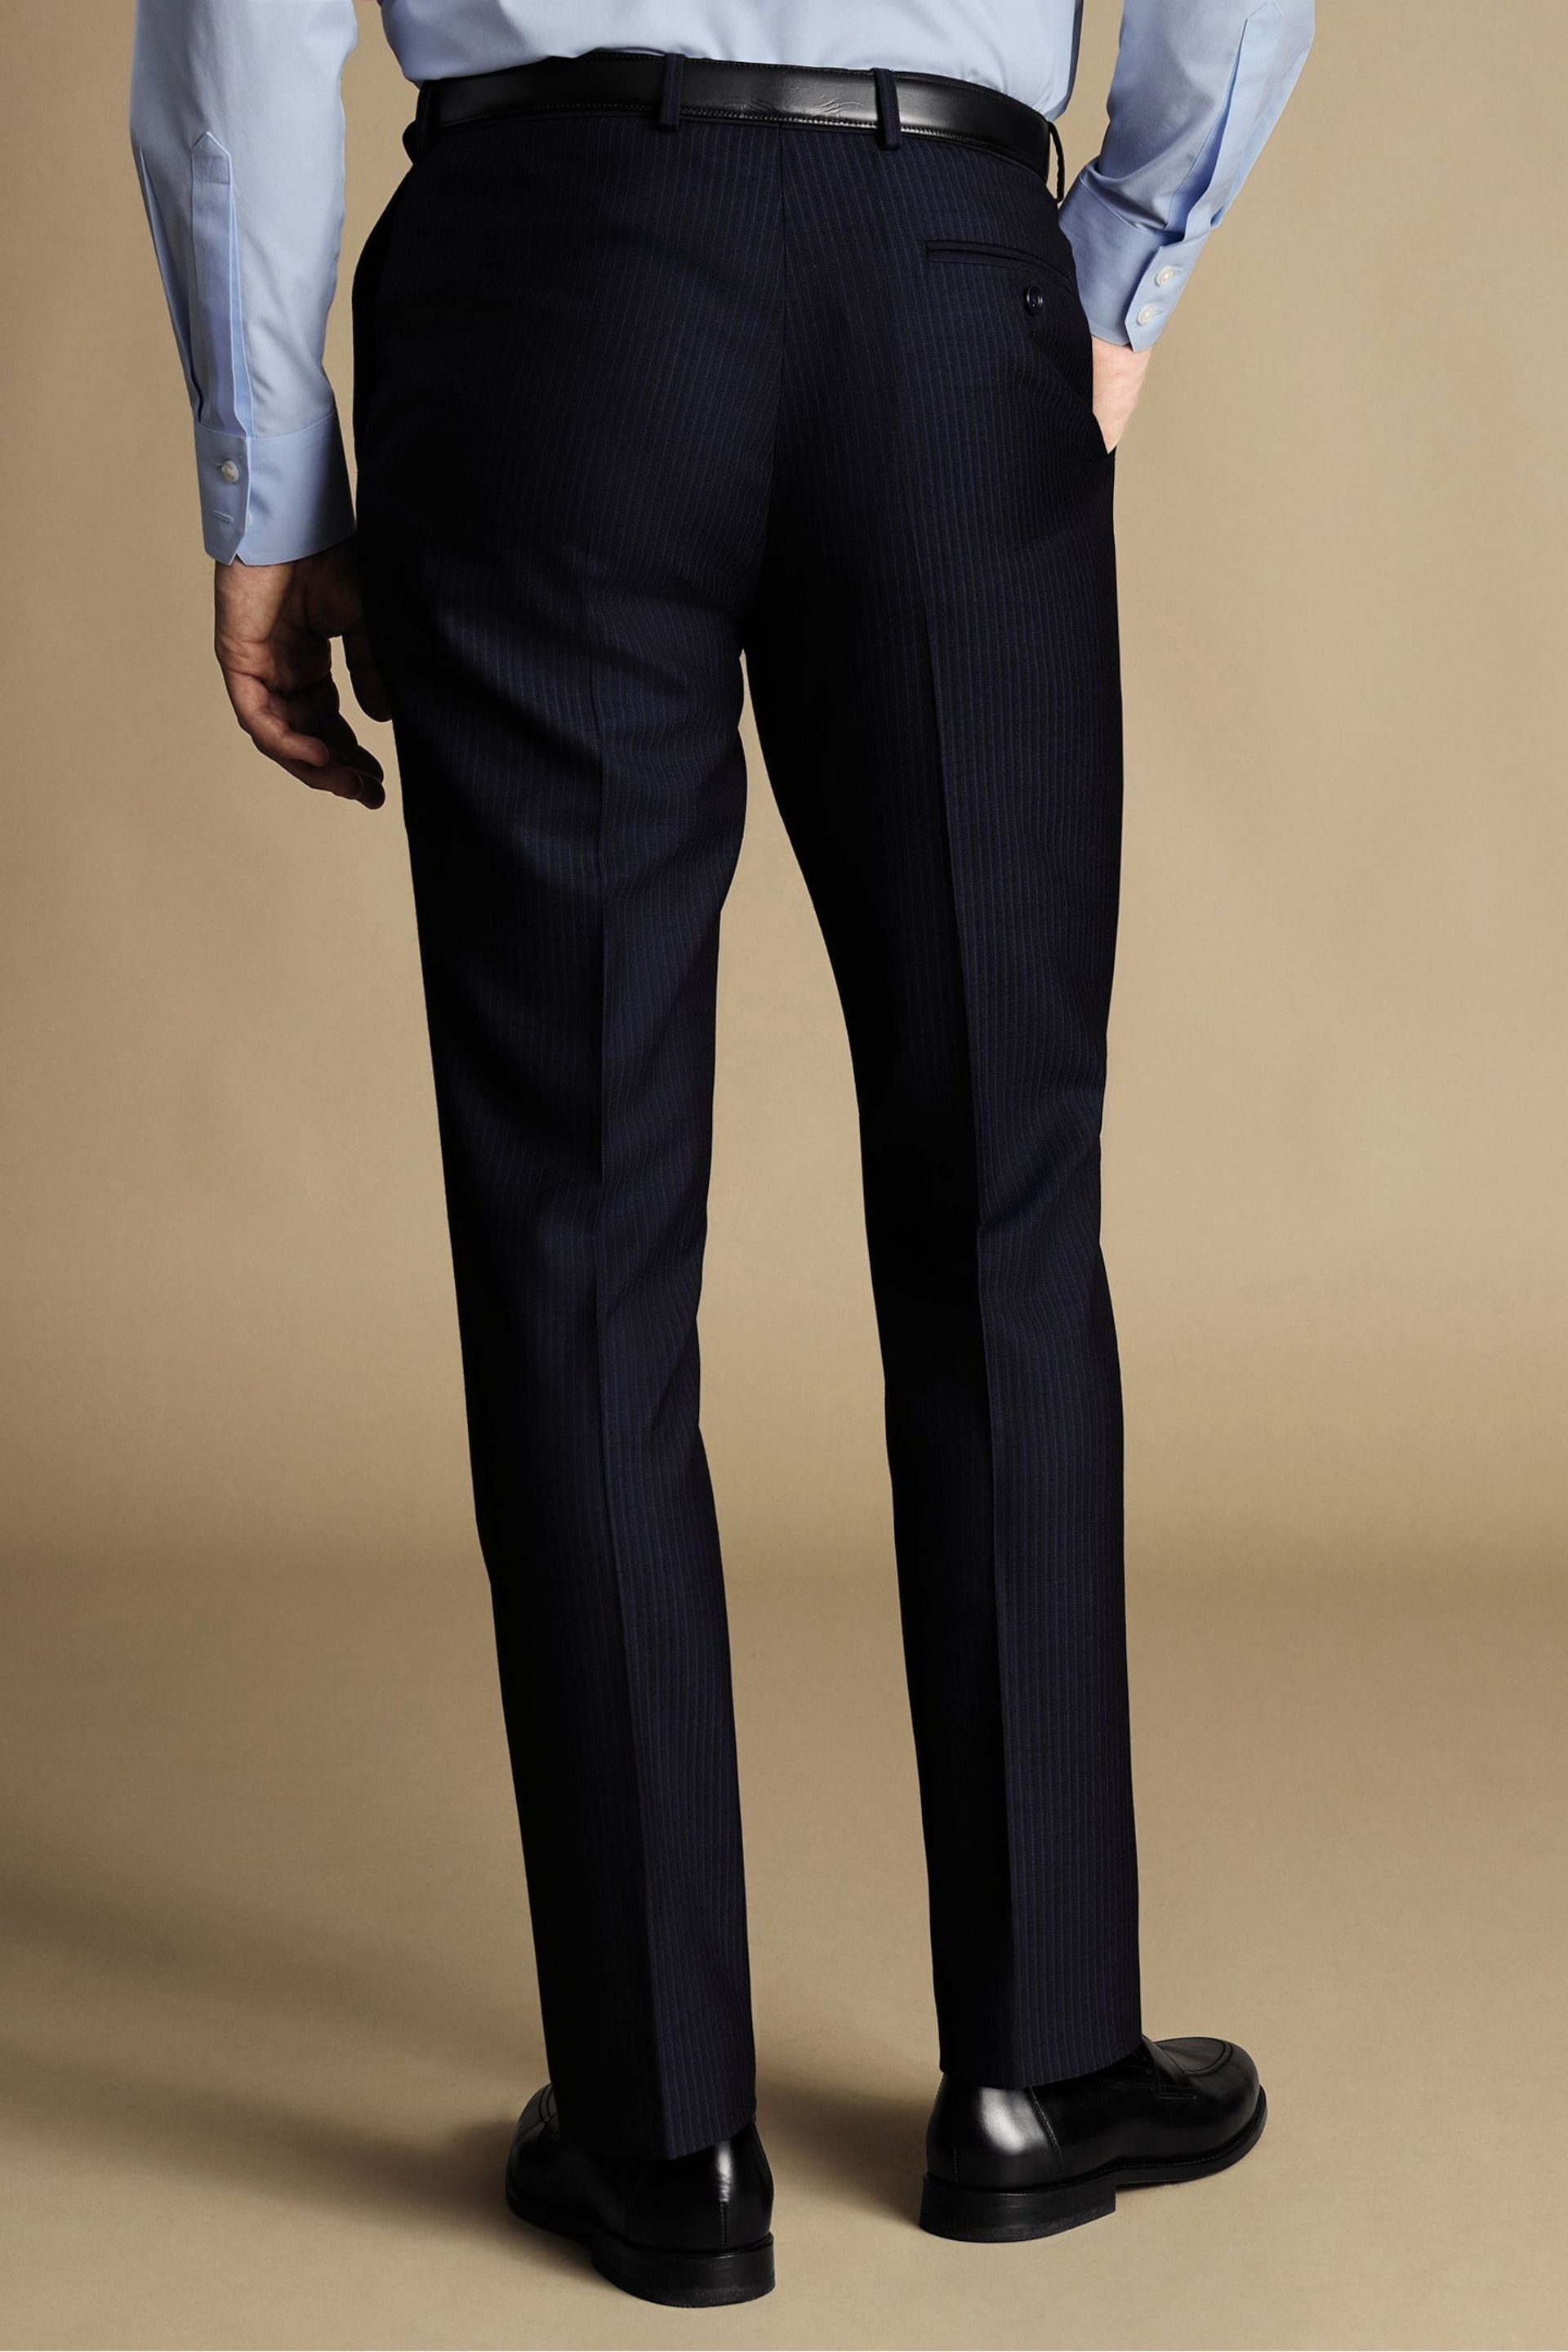 Charles Tyrwhitt Blue Stripe Slim Fit Suit Trousers - Image 3 of 4